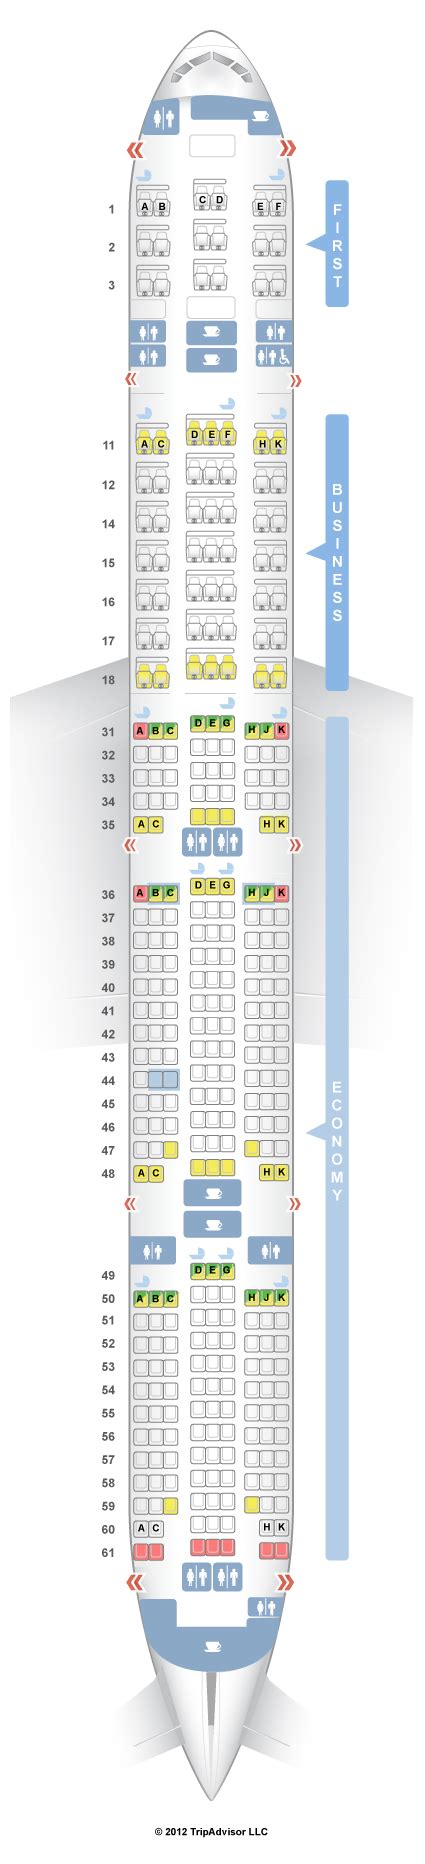 Singapore Airlines Flight Information